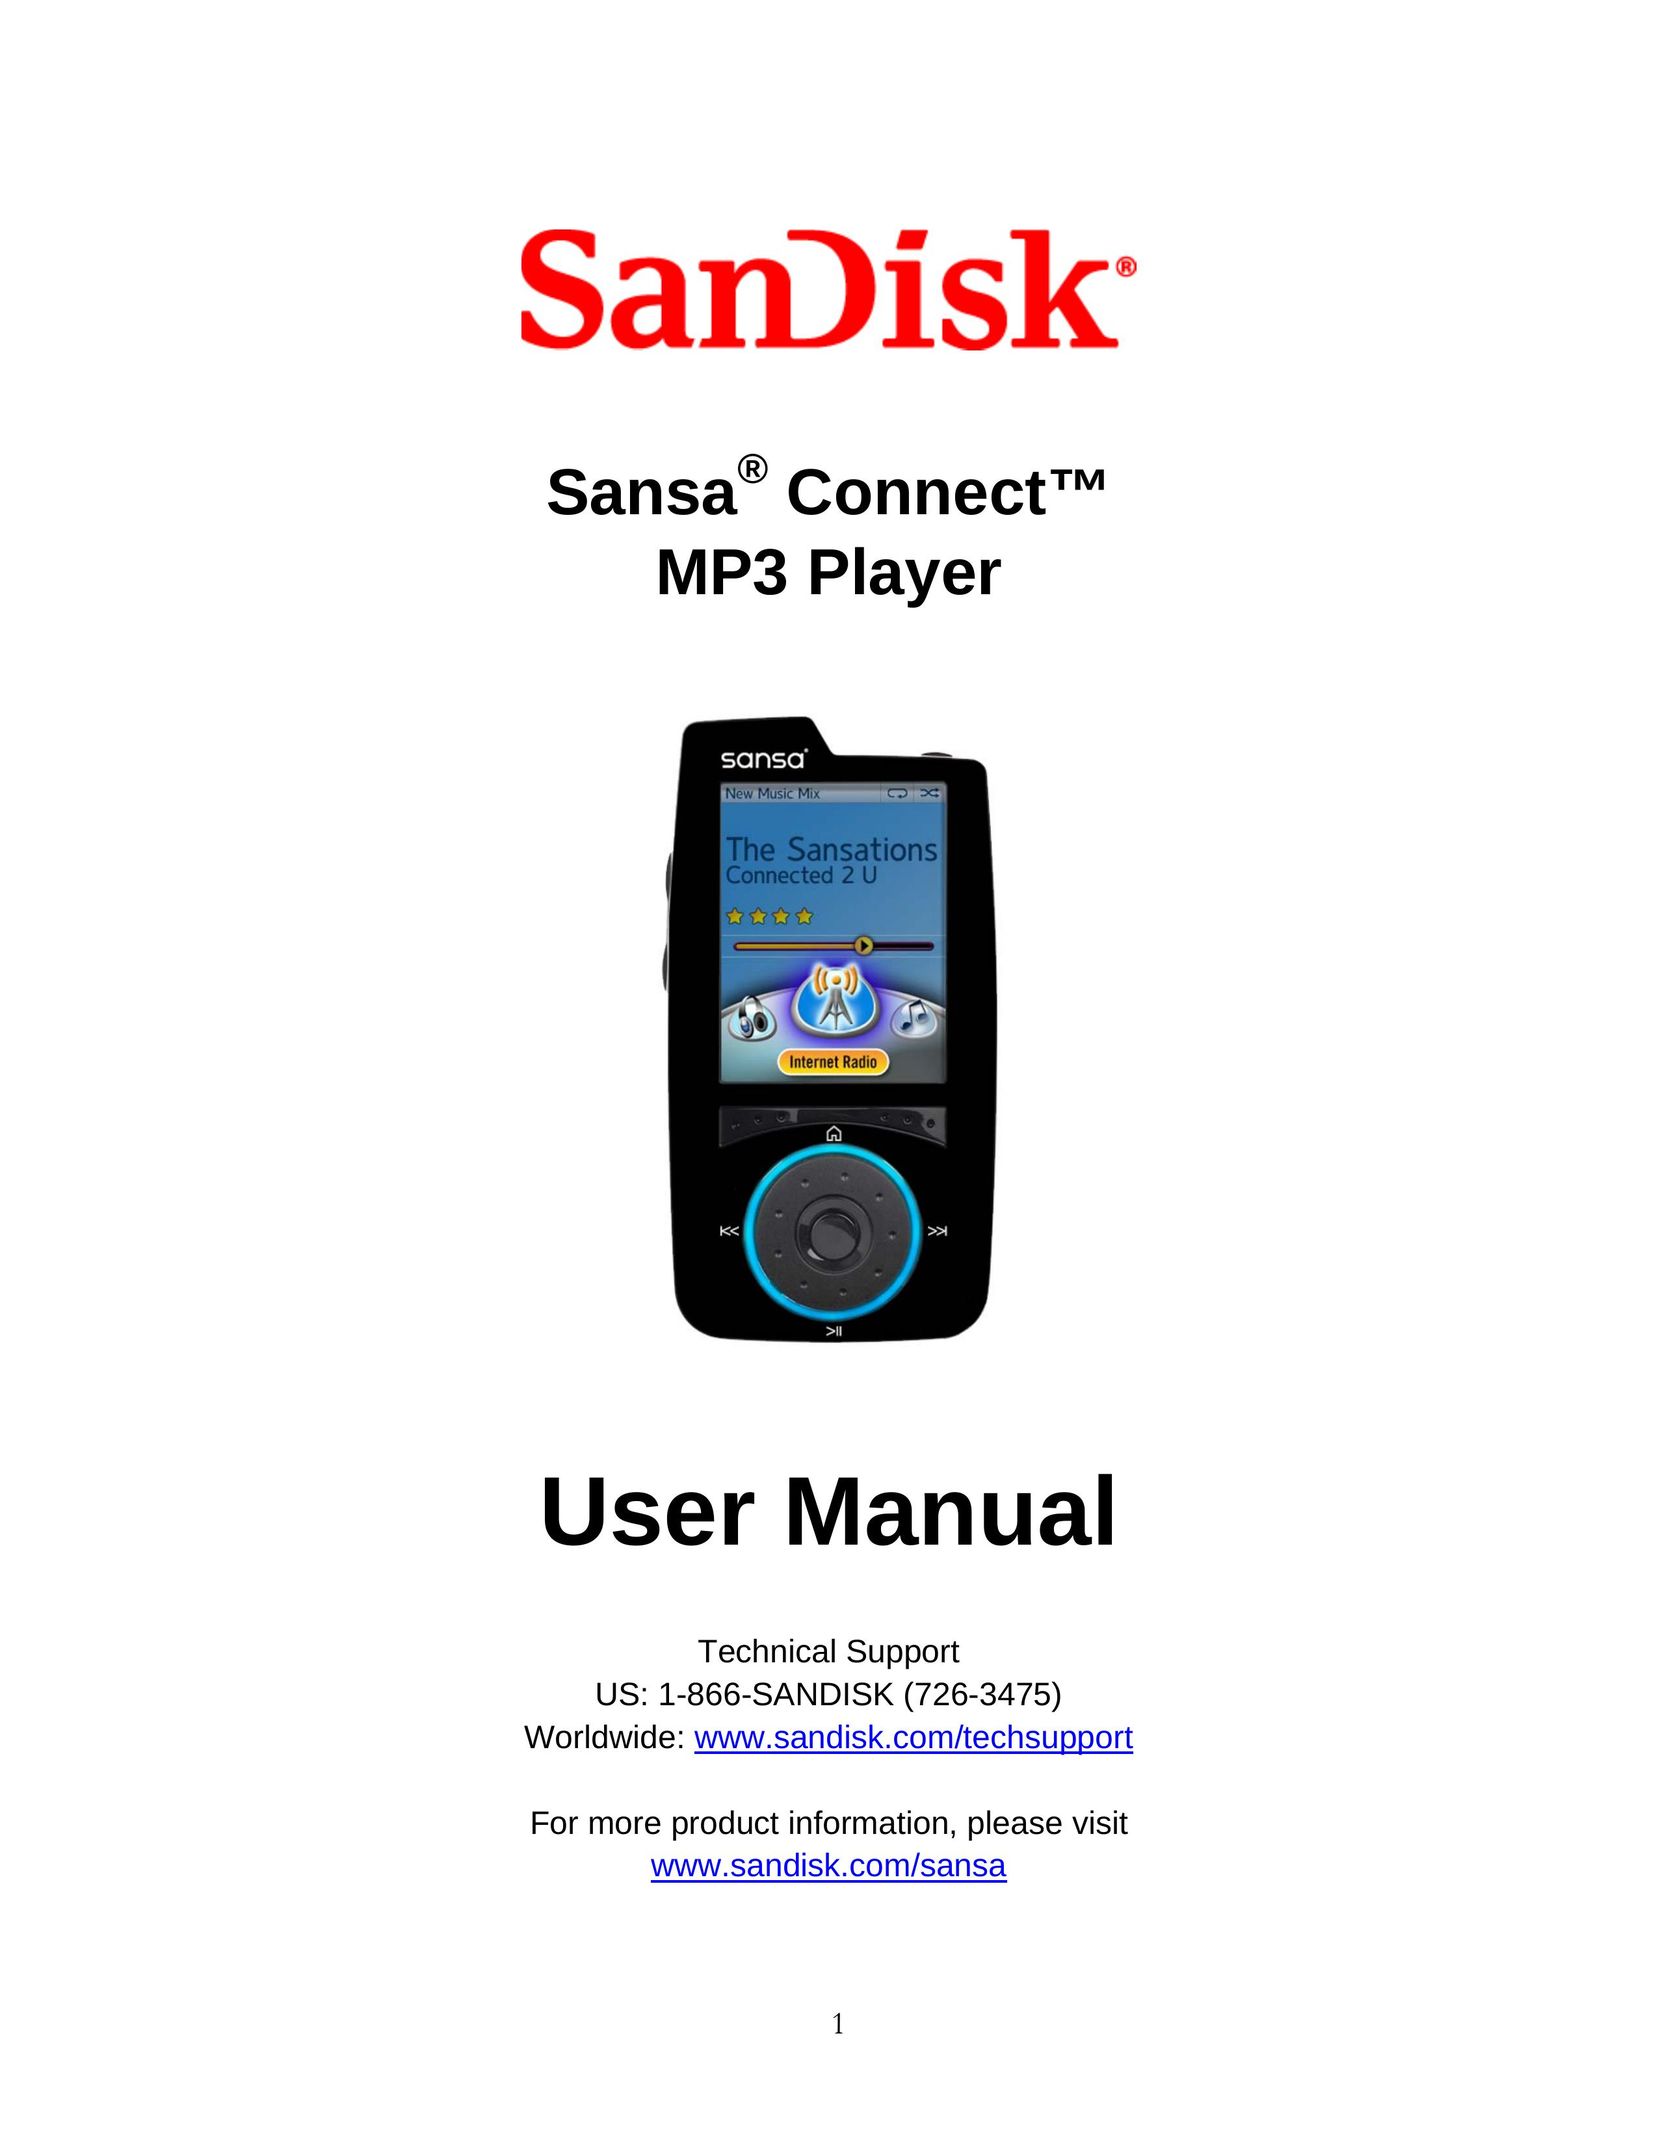 SanDisk Sansa Connect MP3 Player User Manual